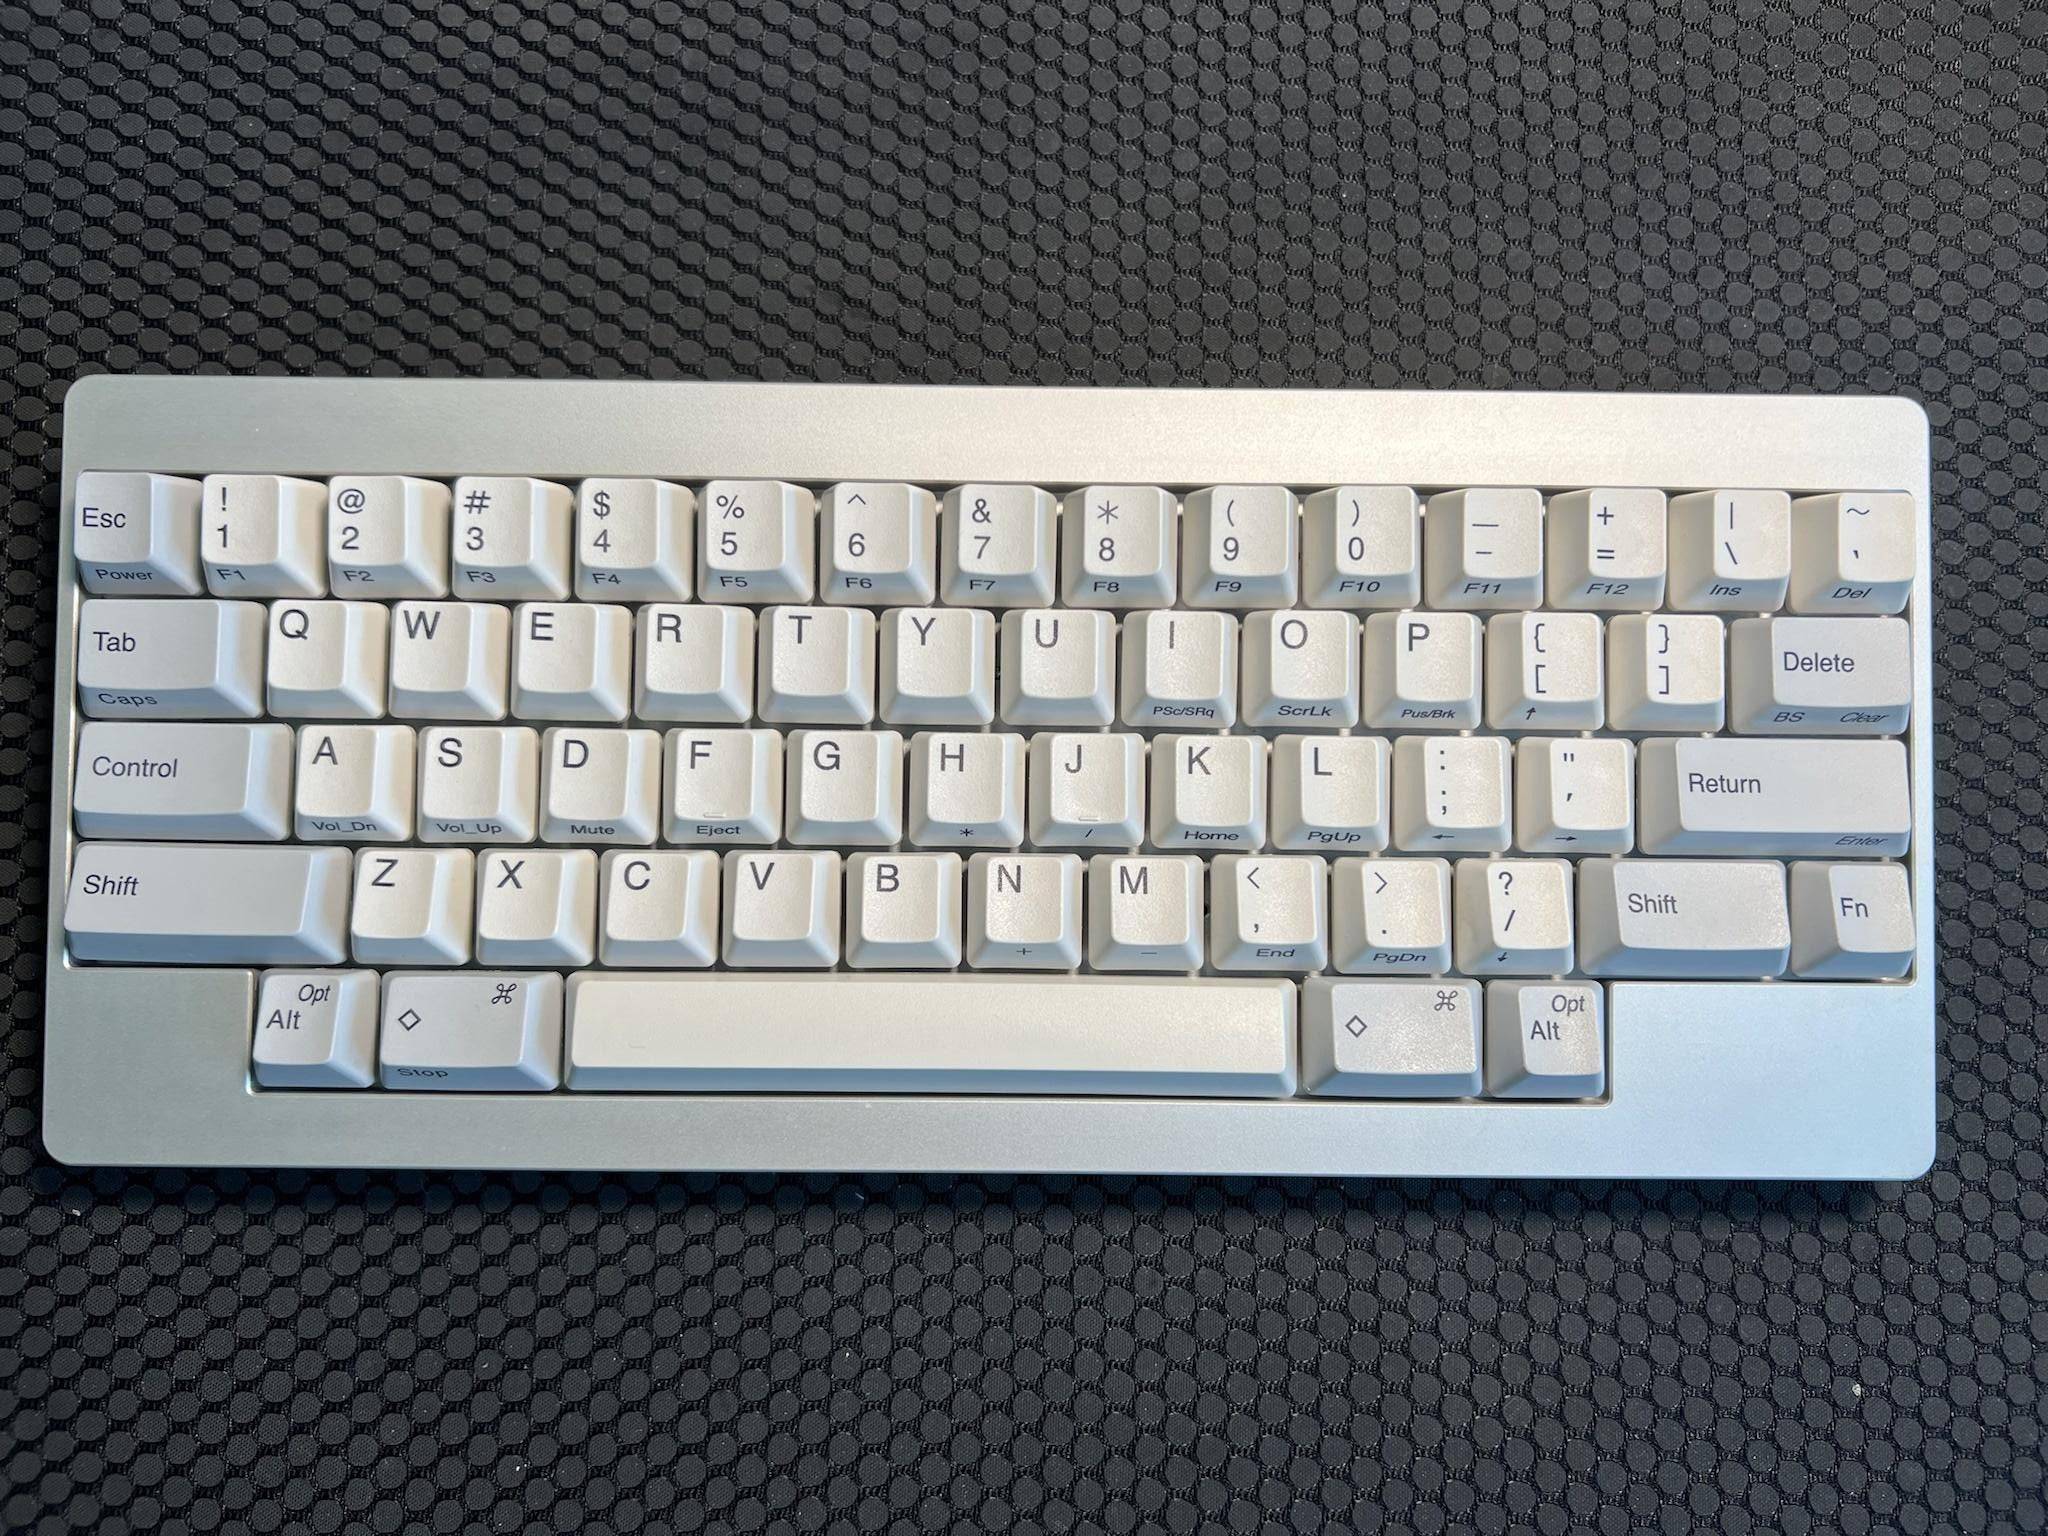 [KFA MARKETPLACE] Prototype Aluminum HHKB moded Keyboard - KeebsForAll